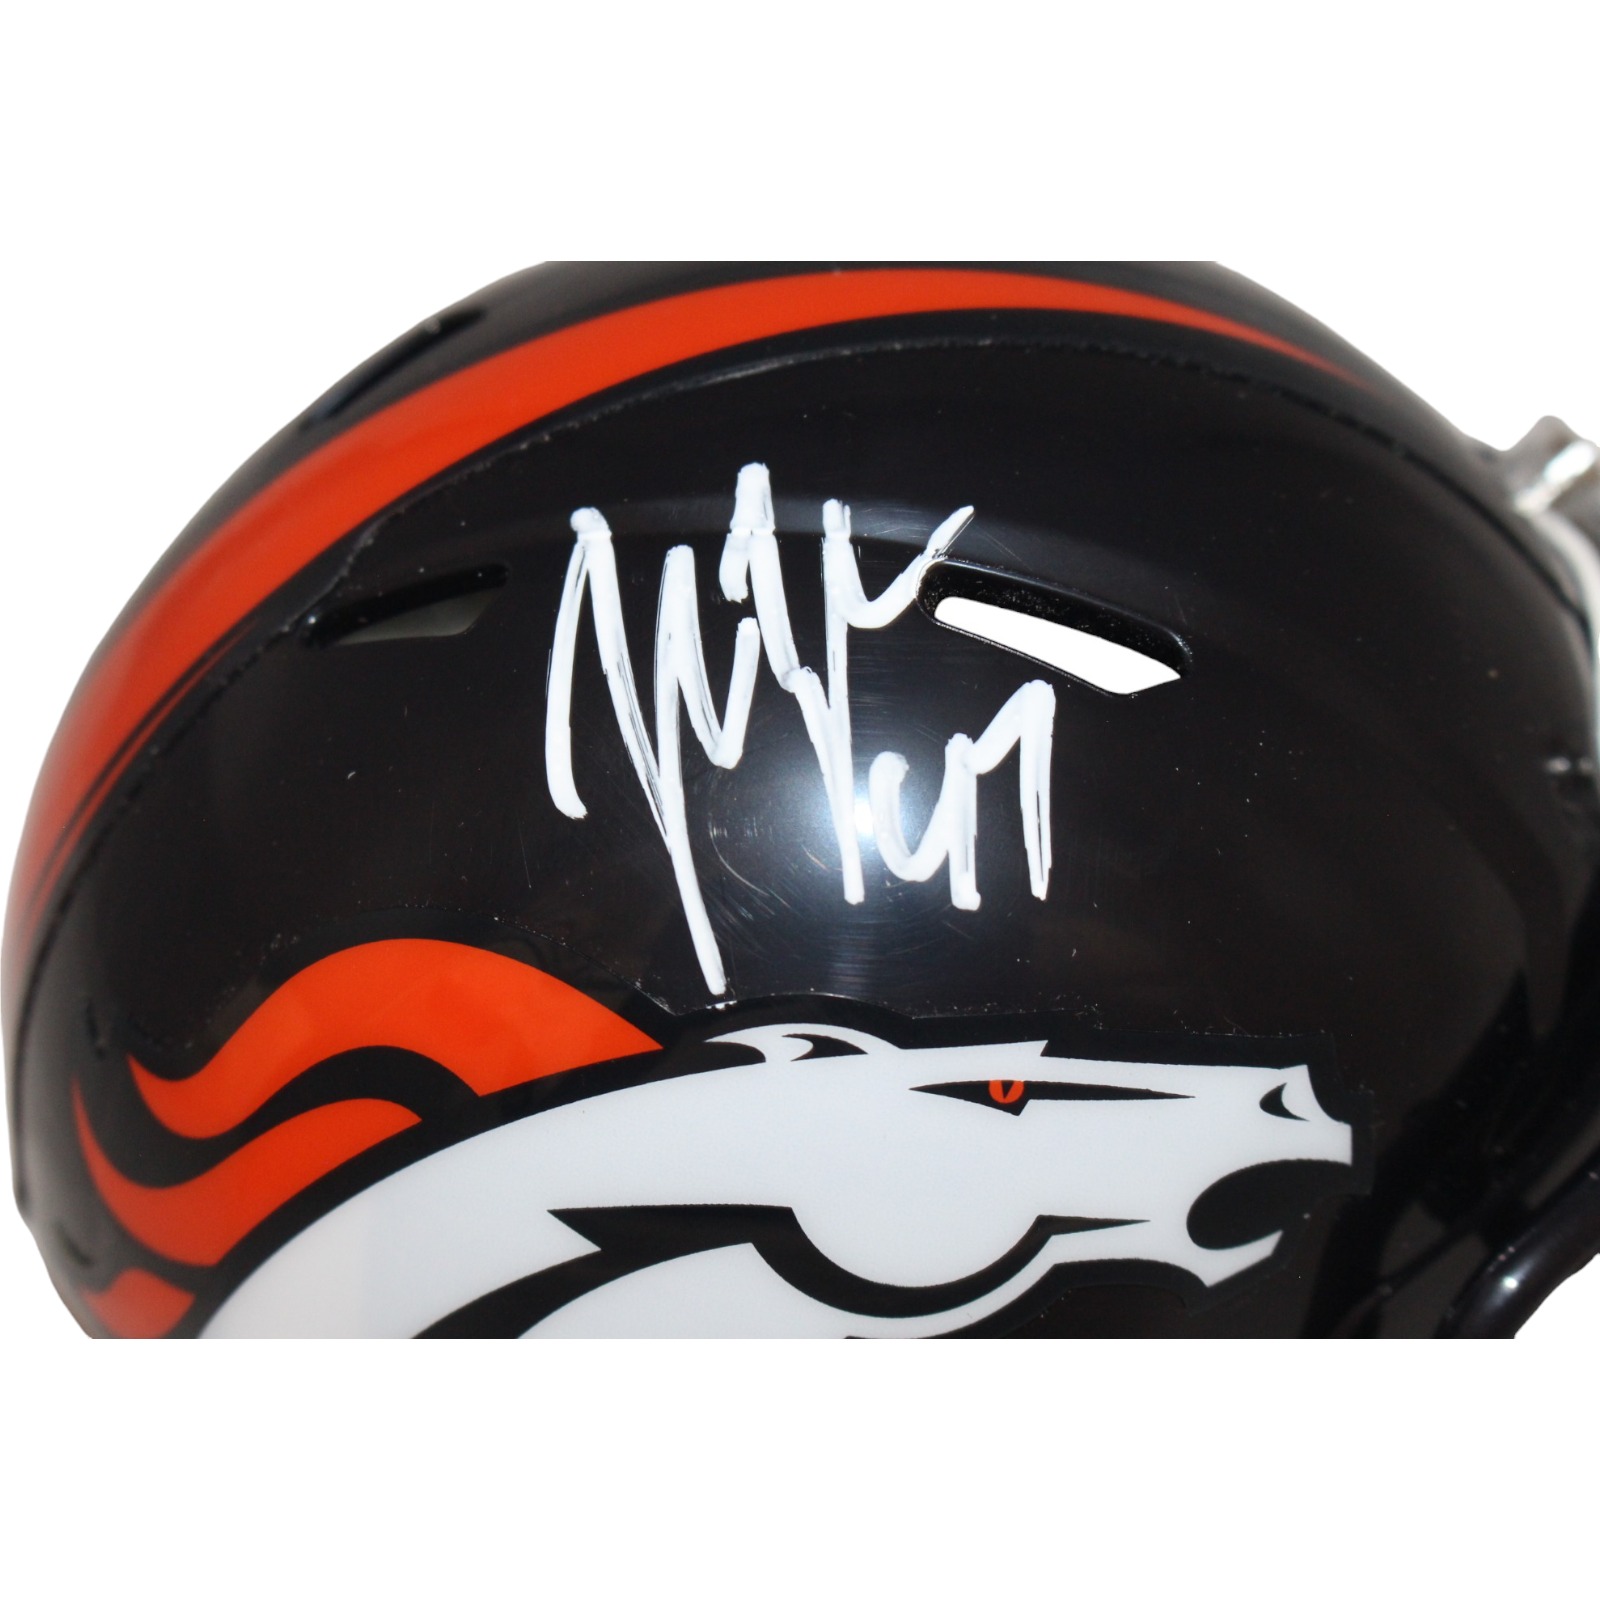 John Lynch Autographed/Signed Denver Broncos Mini Helmet Beckett